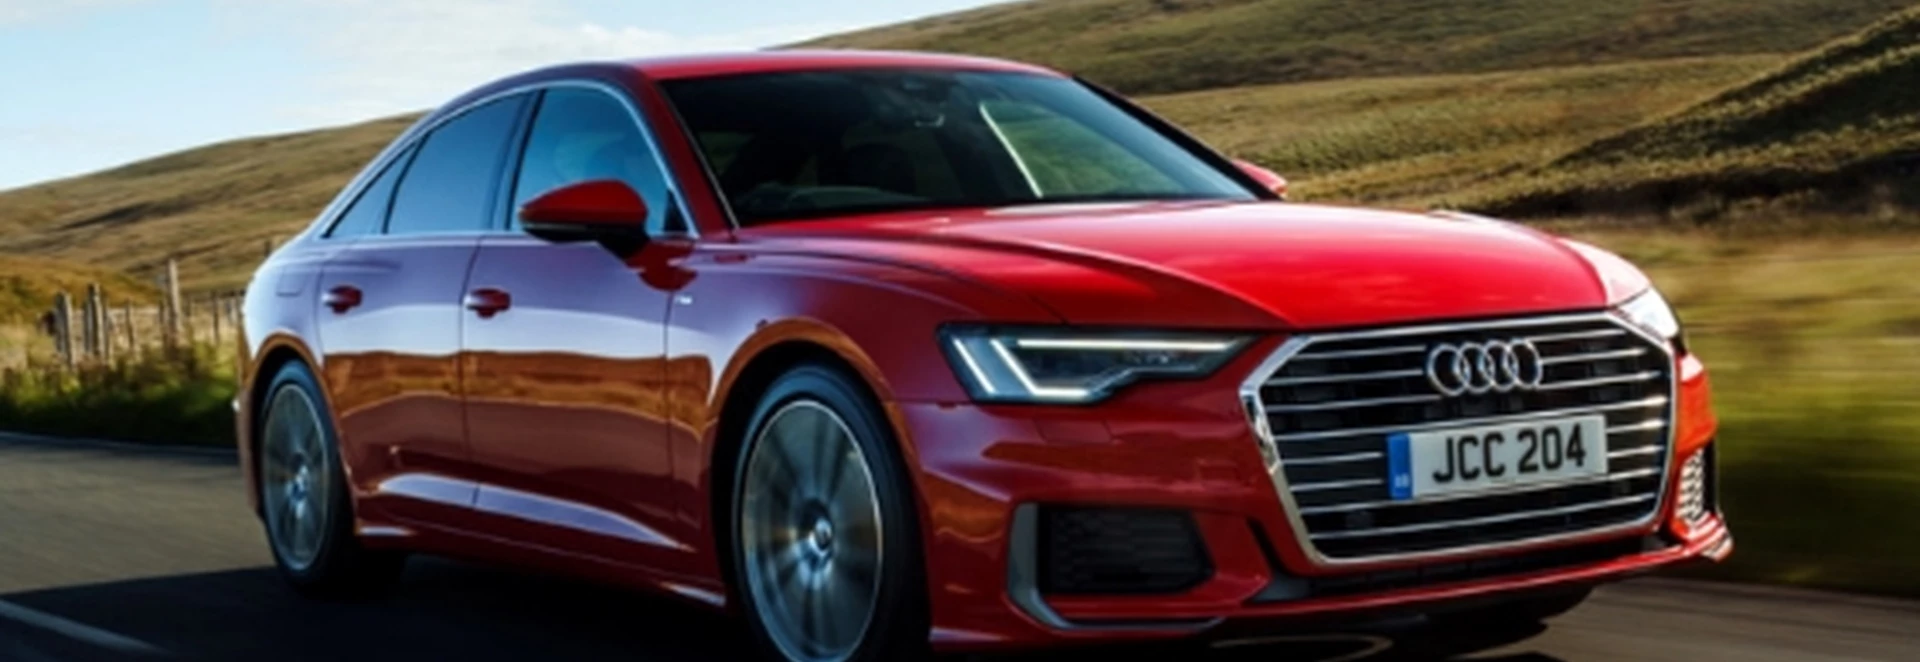 2019 Audi A6 review